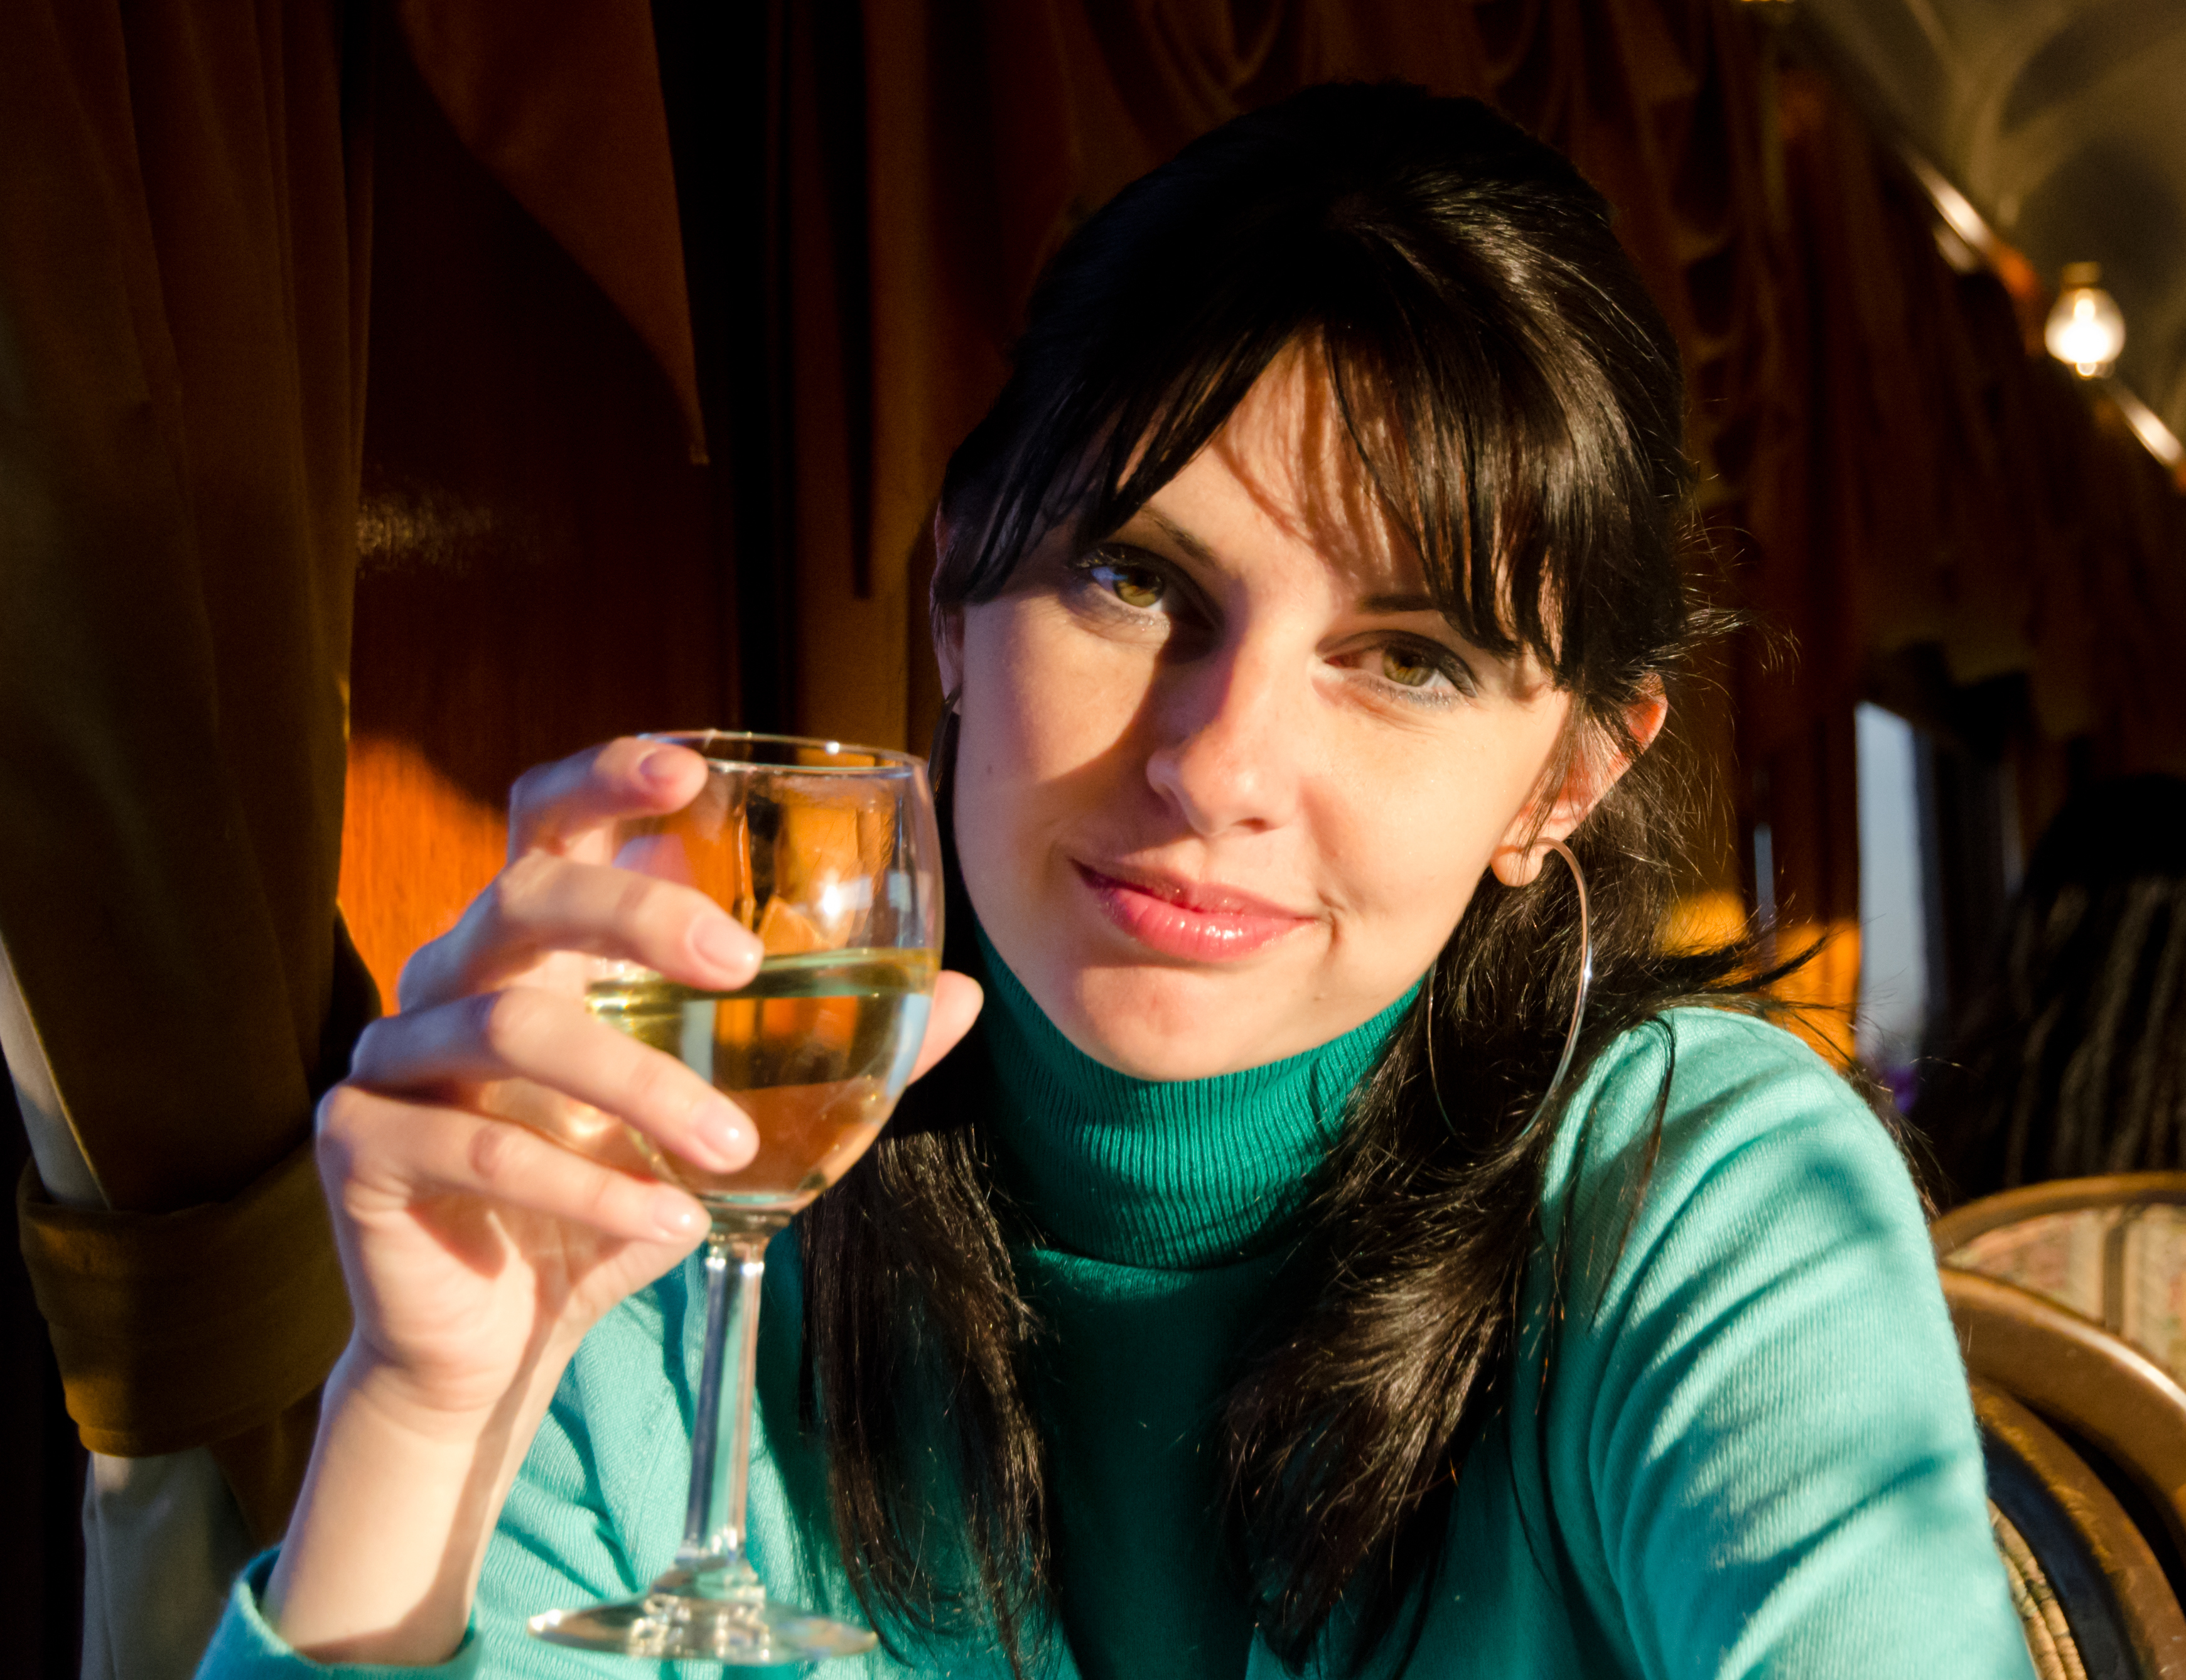 Young female enjoys wine.